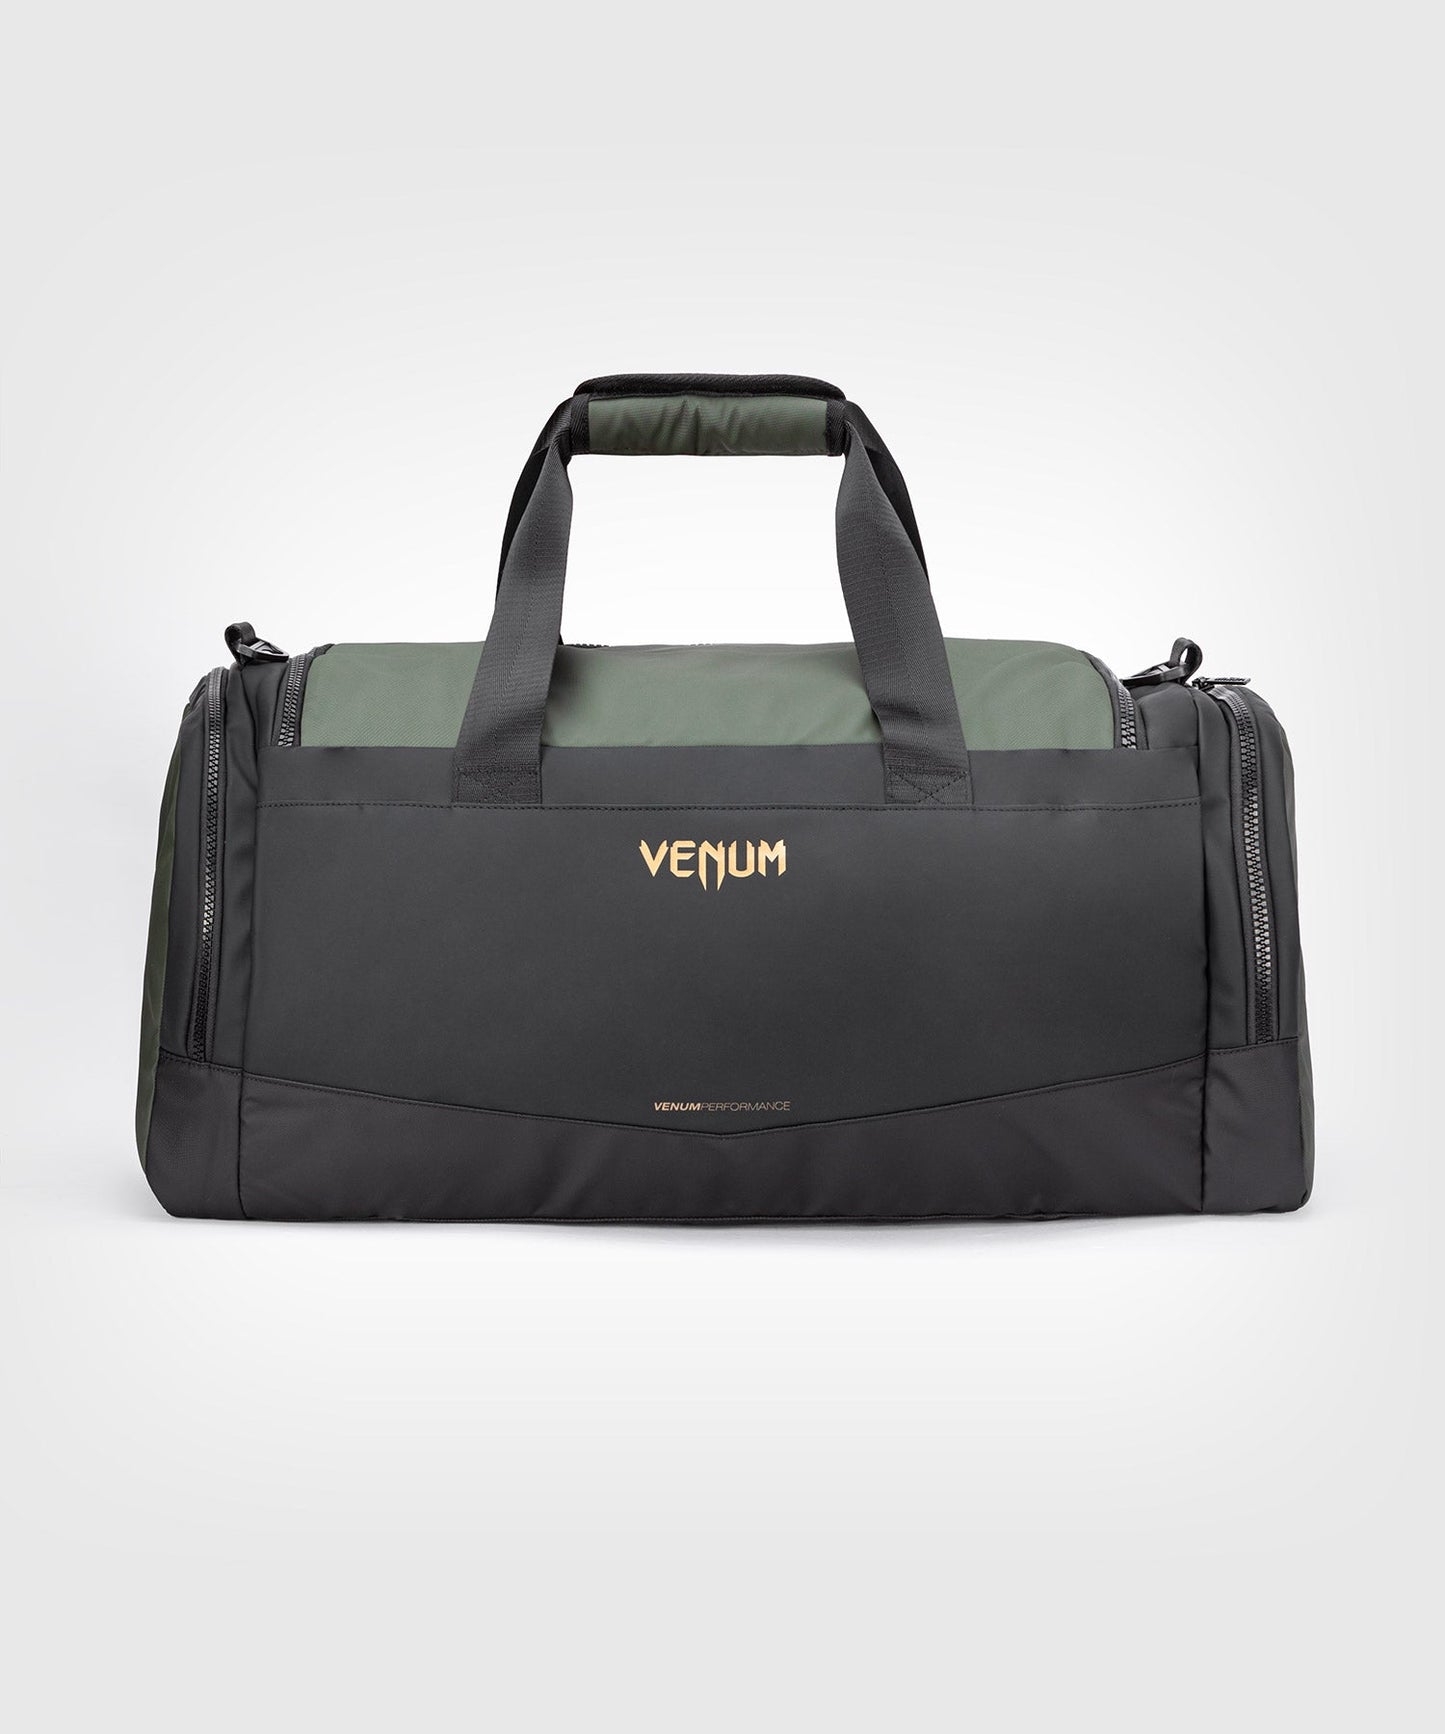 Venum Evo 2 Trainer Lite Duffle Bag - Black/Khaki